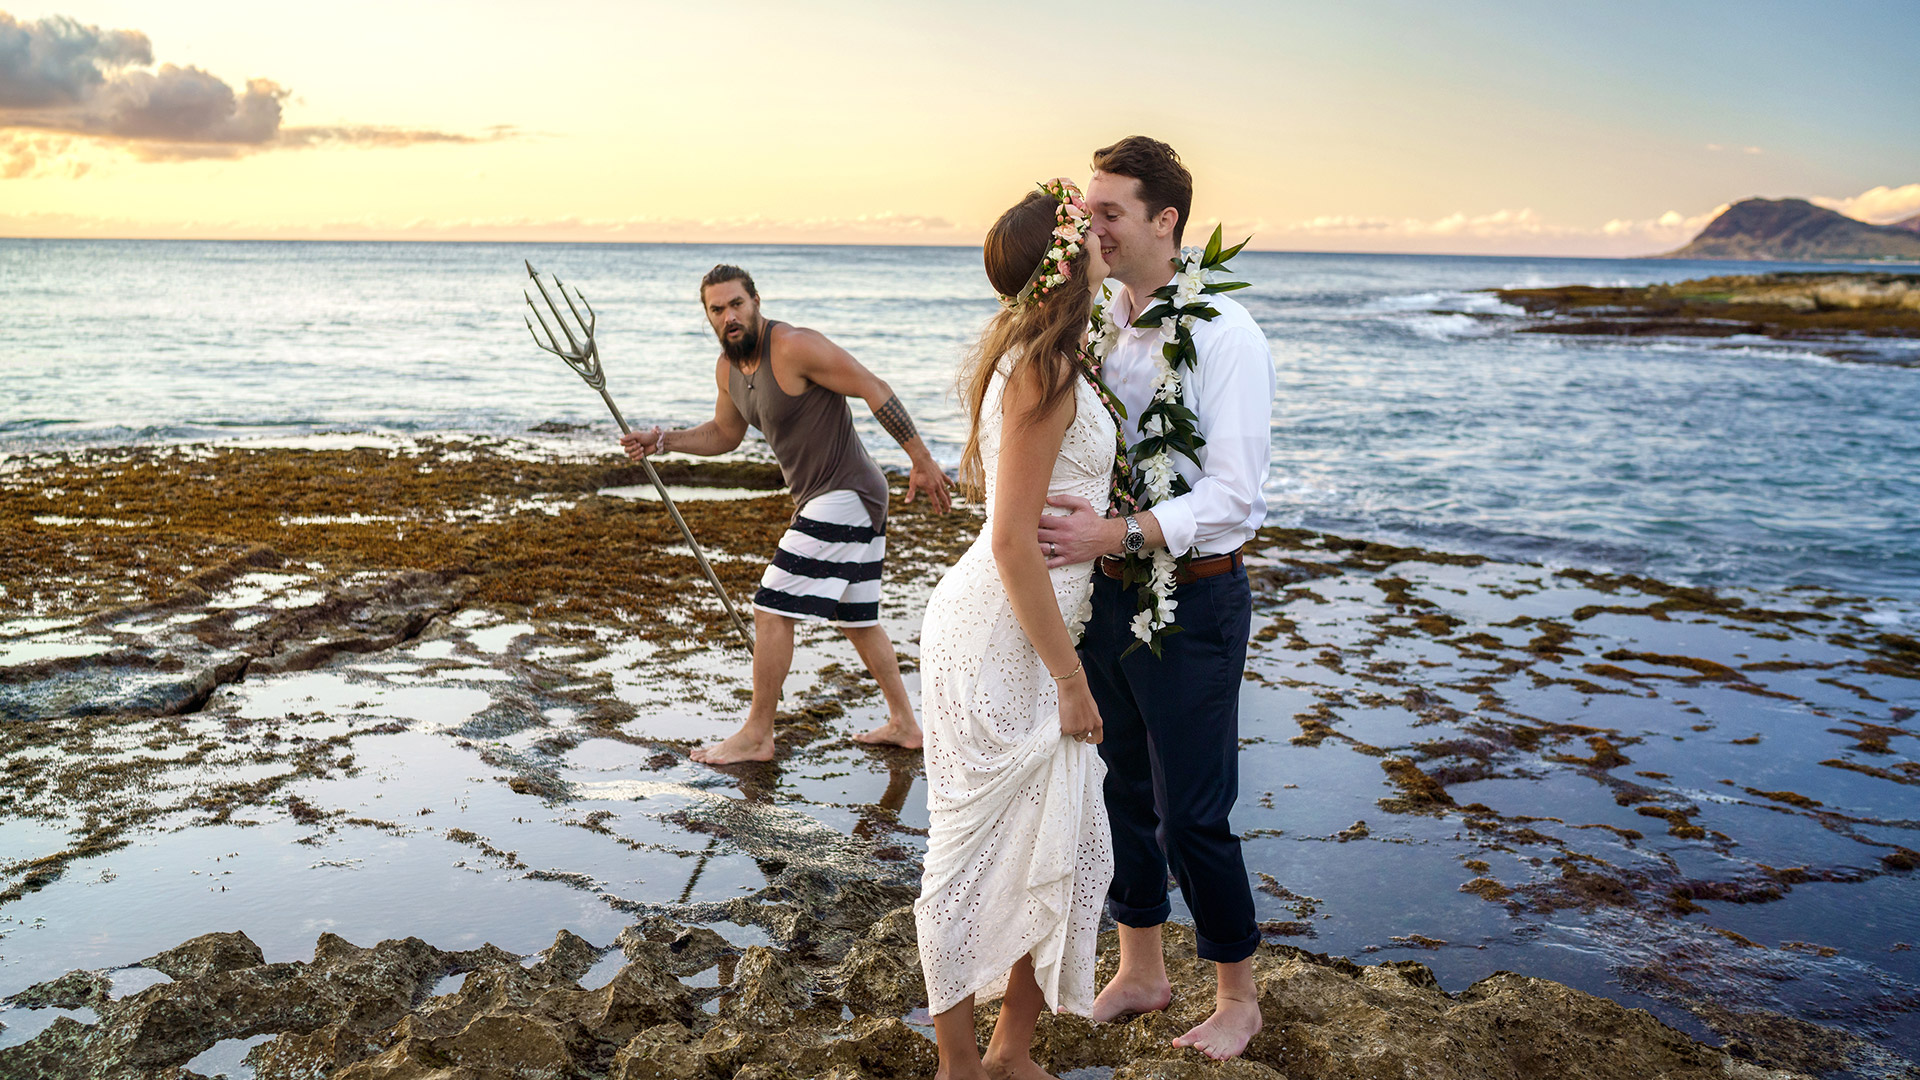 Jason Momoa photobombs our wedding on Oahu, Hawaii